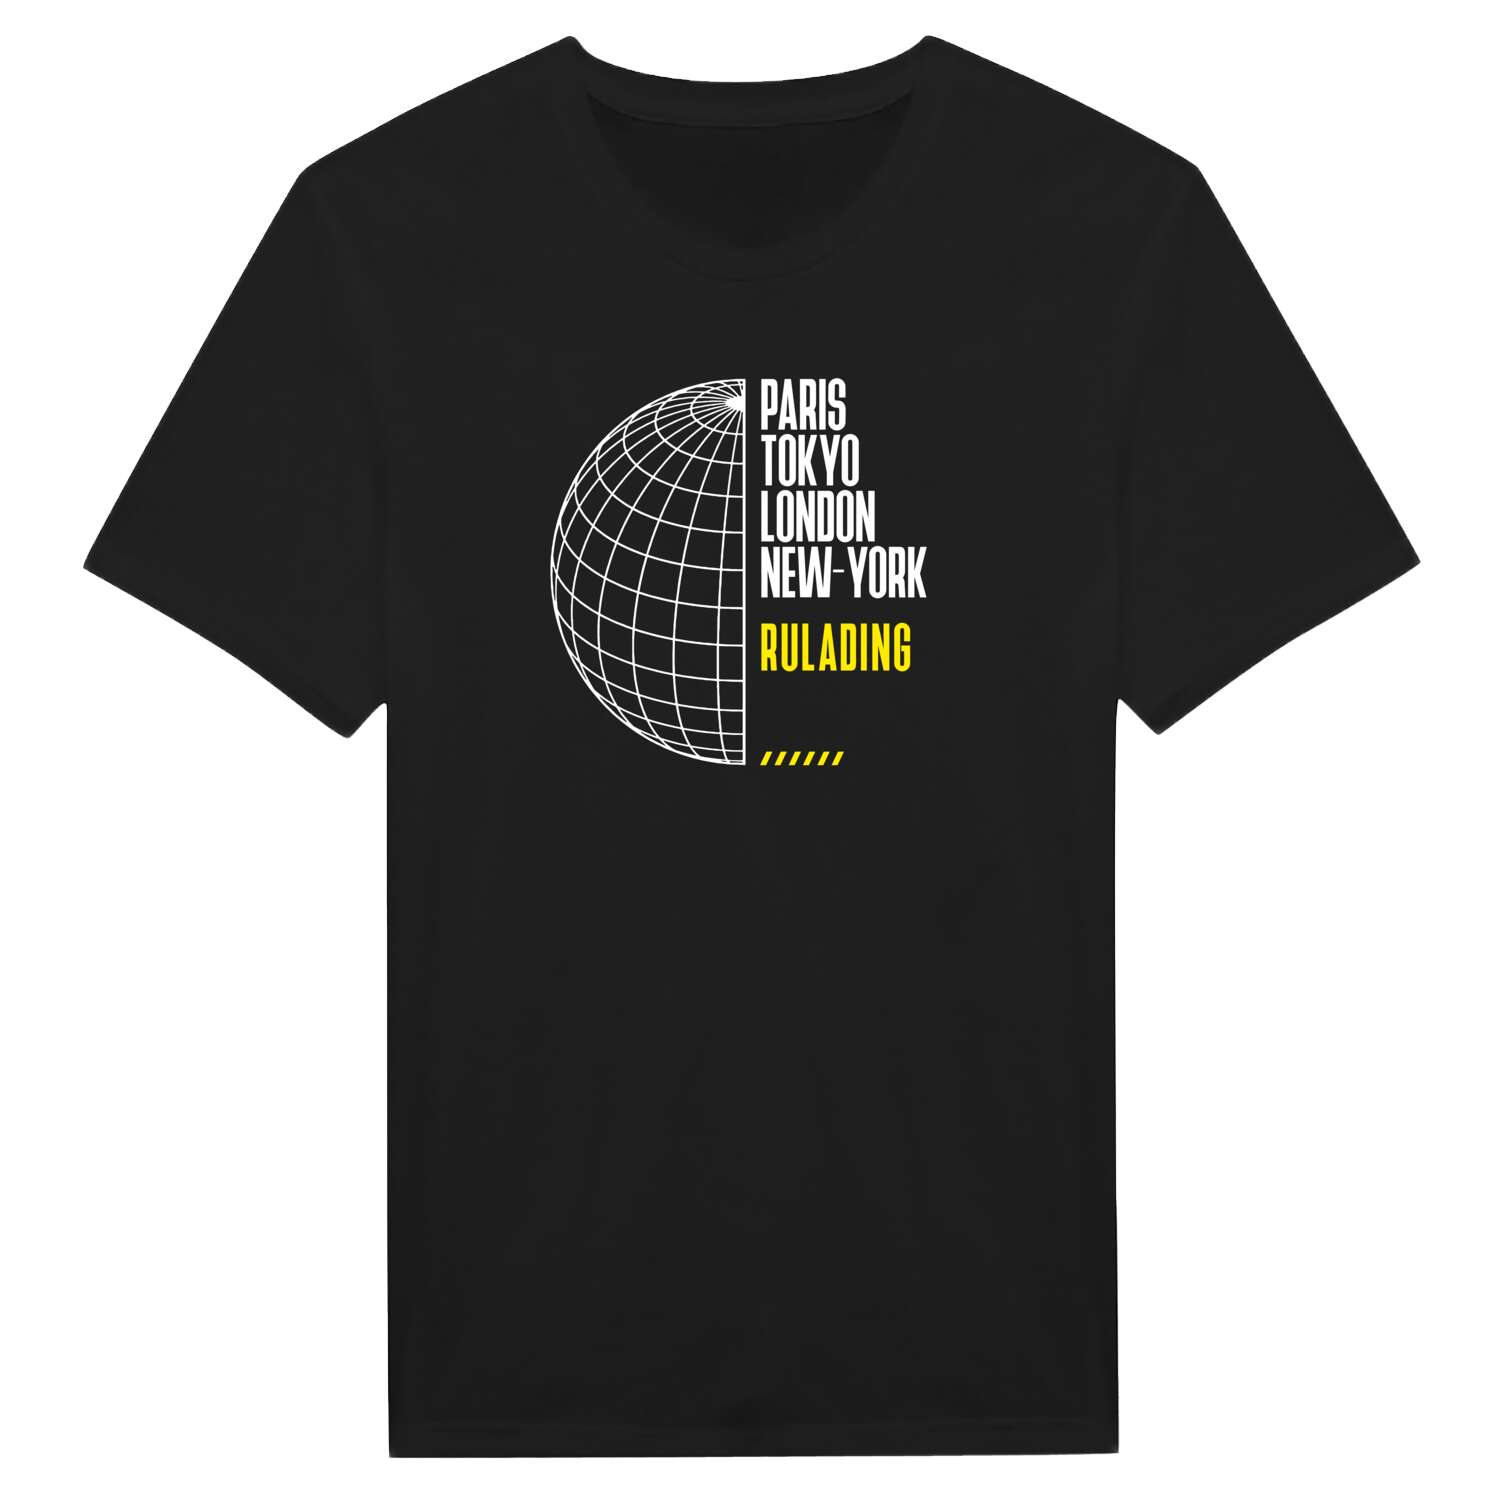 Rulading T-Shirt »Paris Tokyo London«